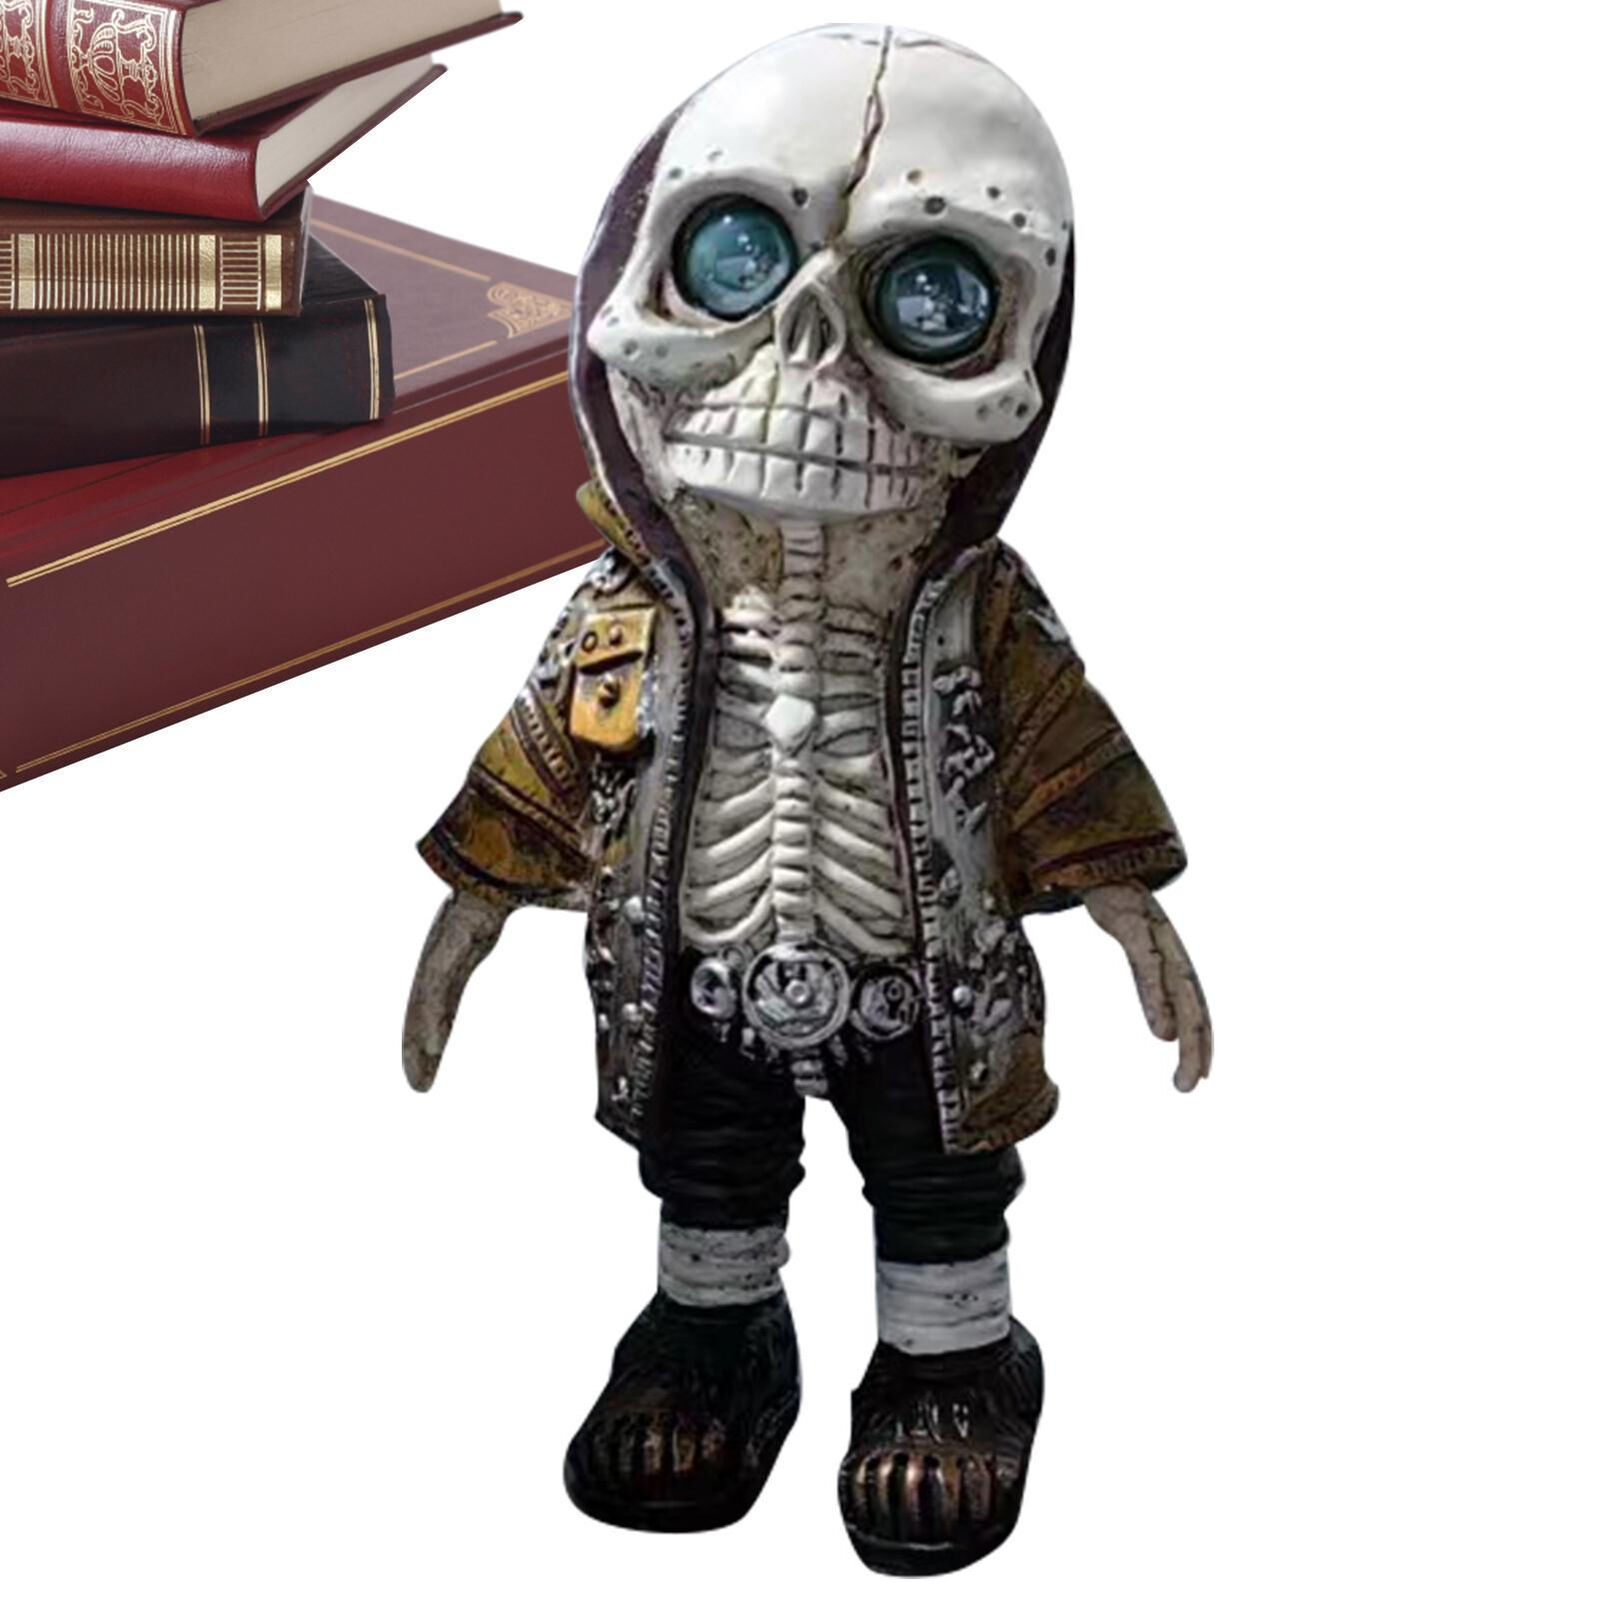 Halloween Skull Figurines Skeleton Doll Statue Crafts Desk Ornaments Home Decor